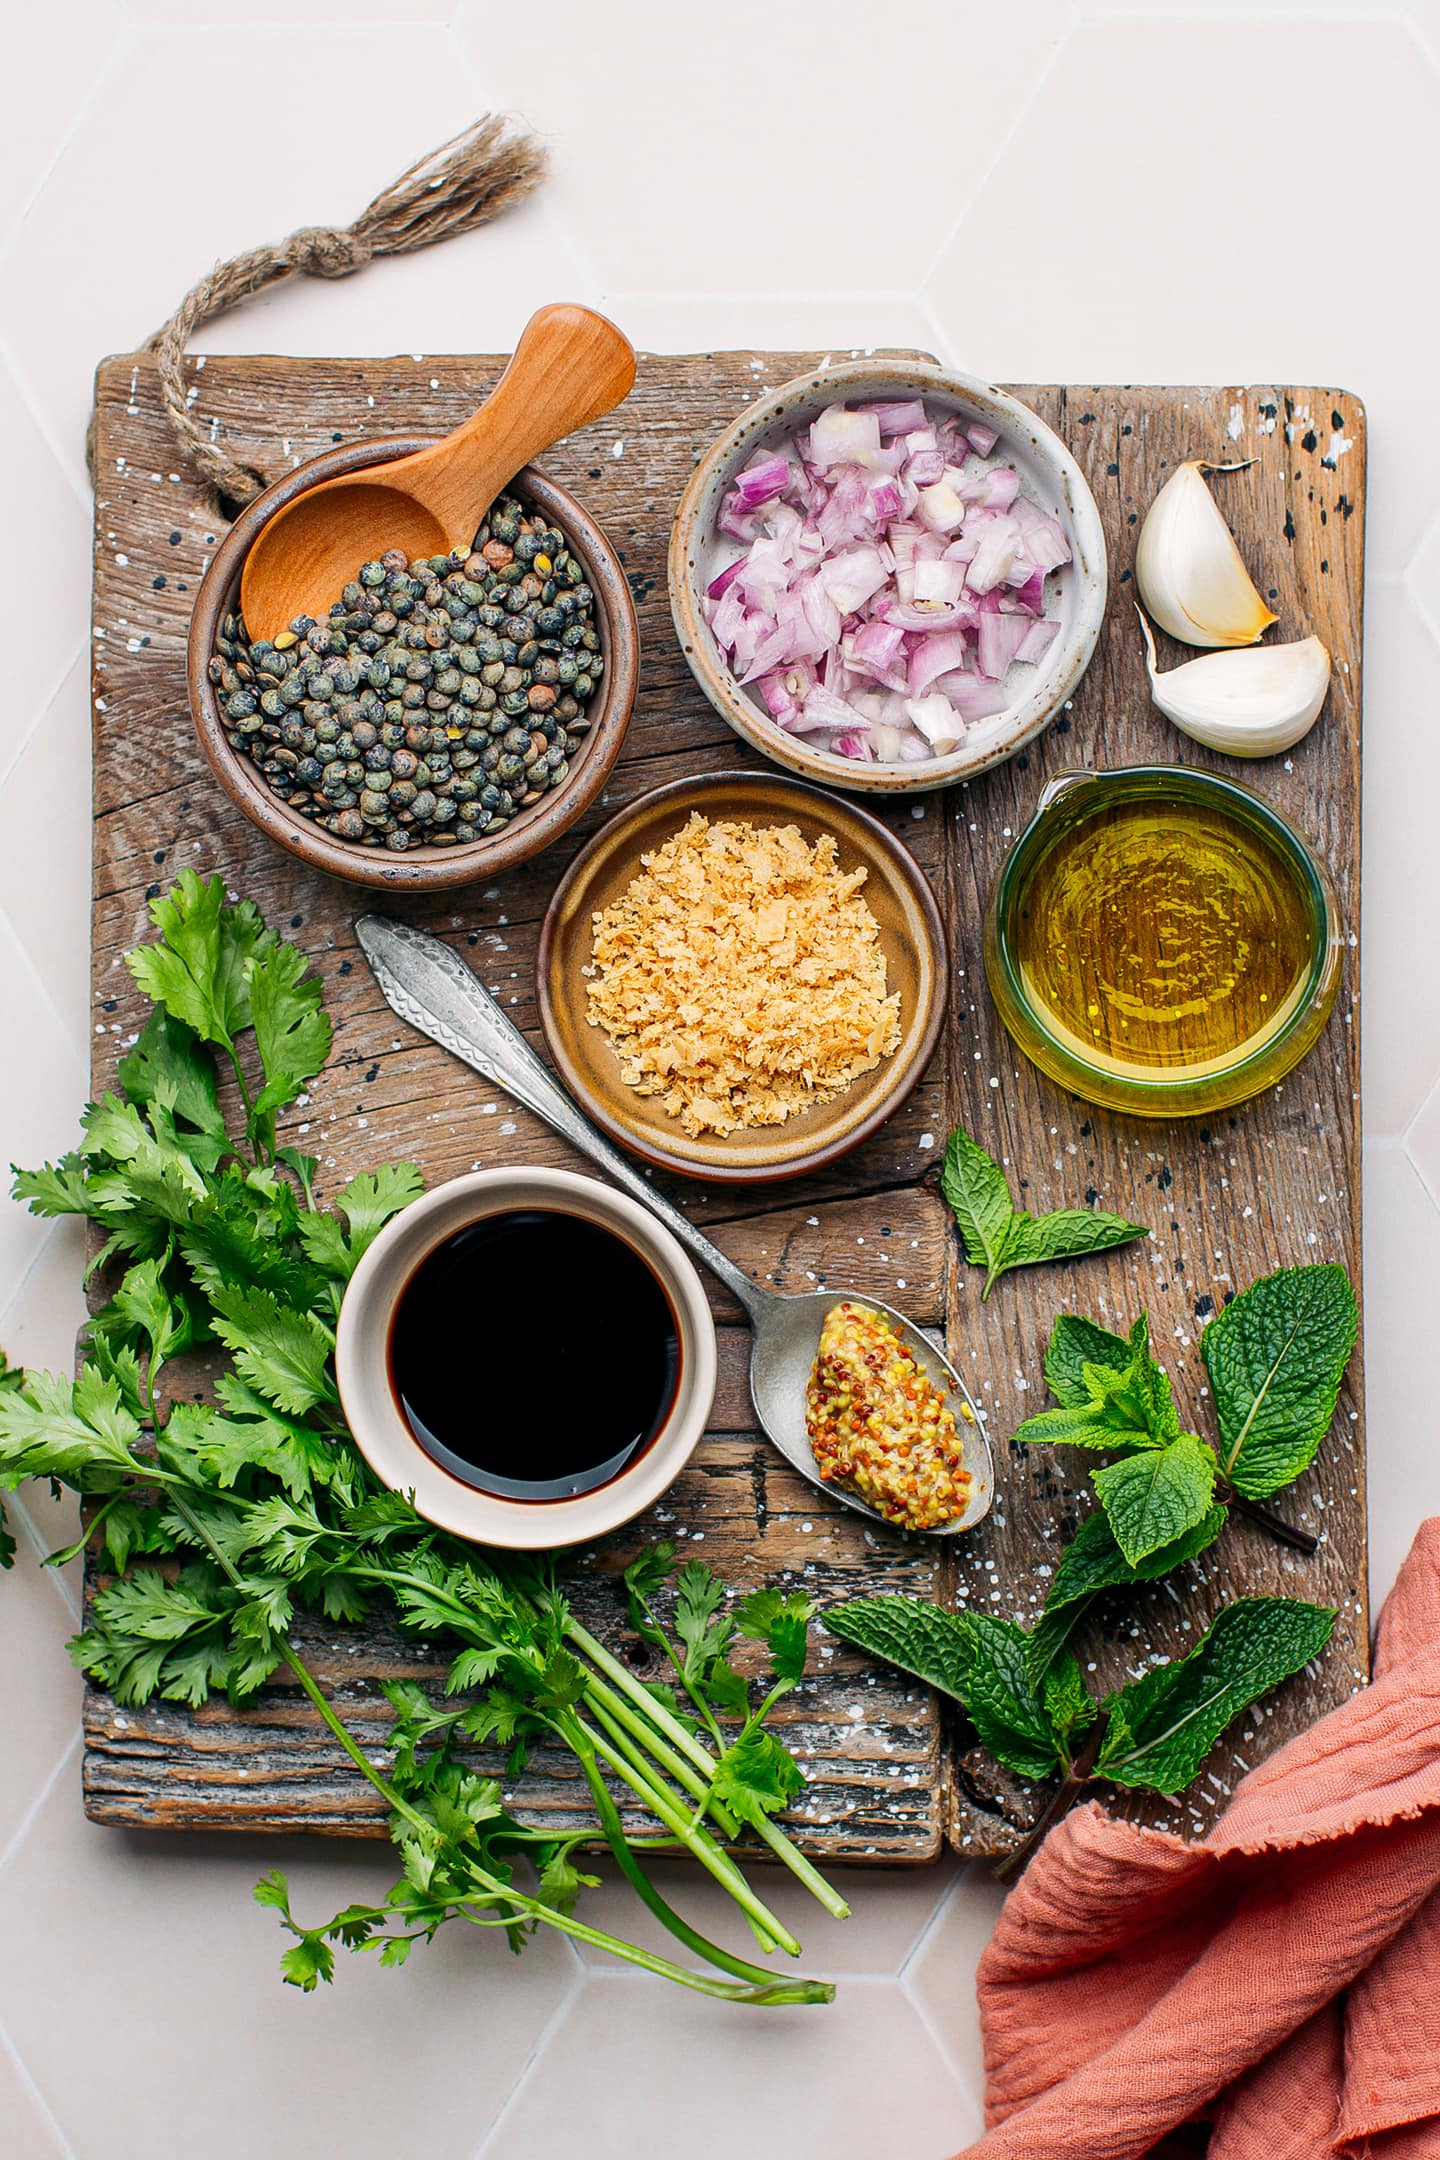 Ingredients like green lentils, olive oil, balsamic vinegar, garlic, and shallots.